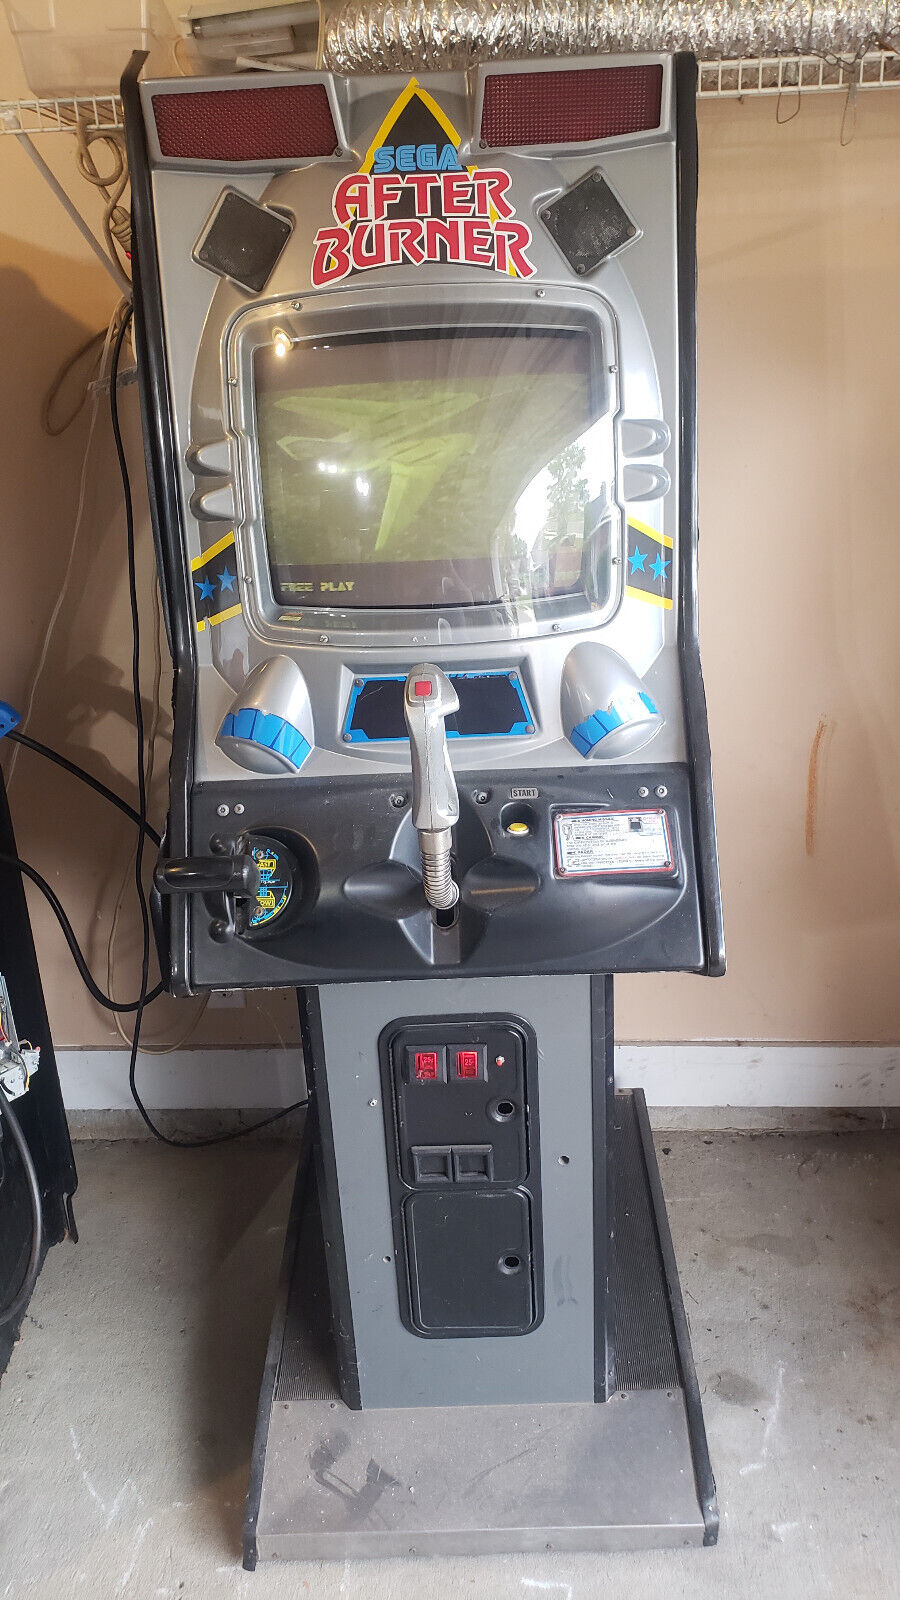 After Burner Sega COIN-OP Arcade Machine Original Fully Working WITH CRT